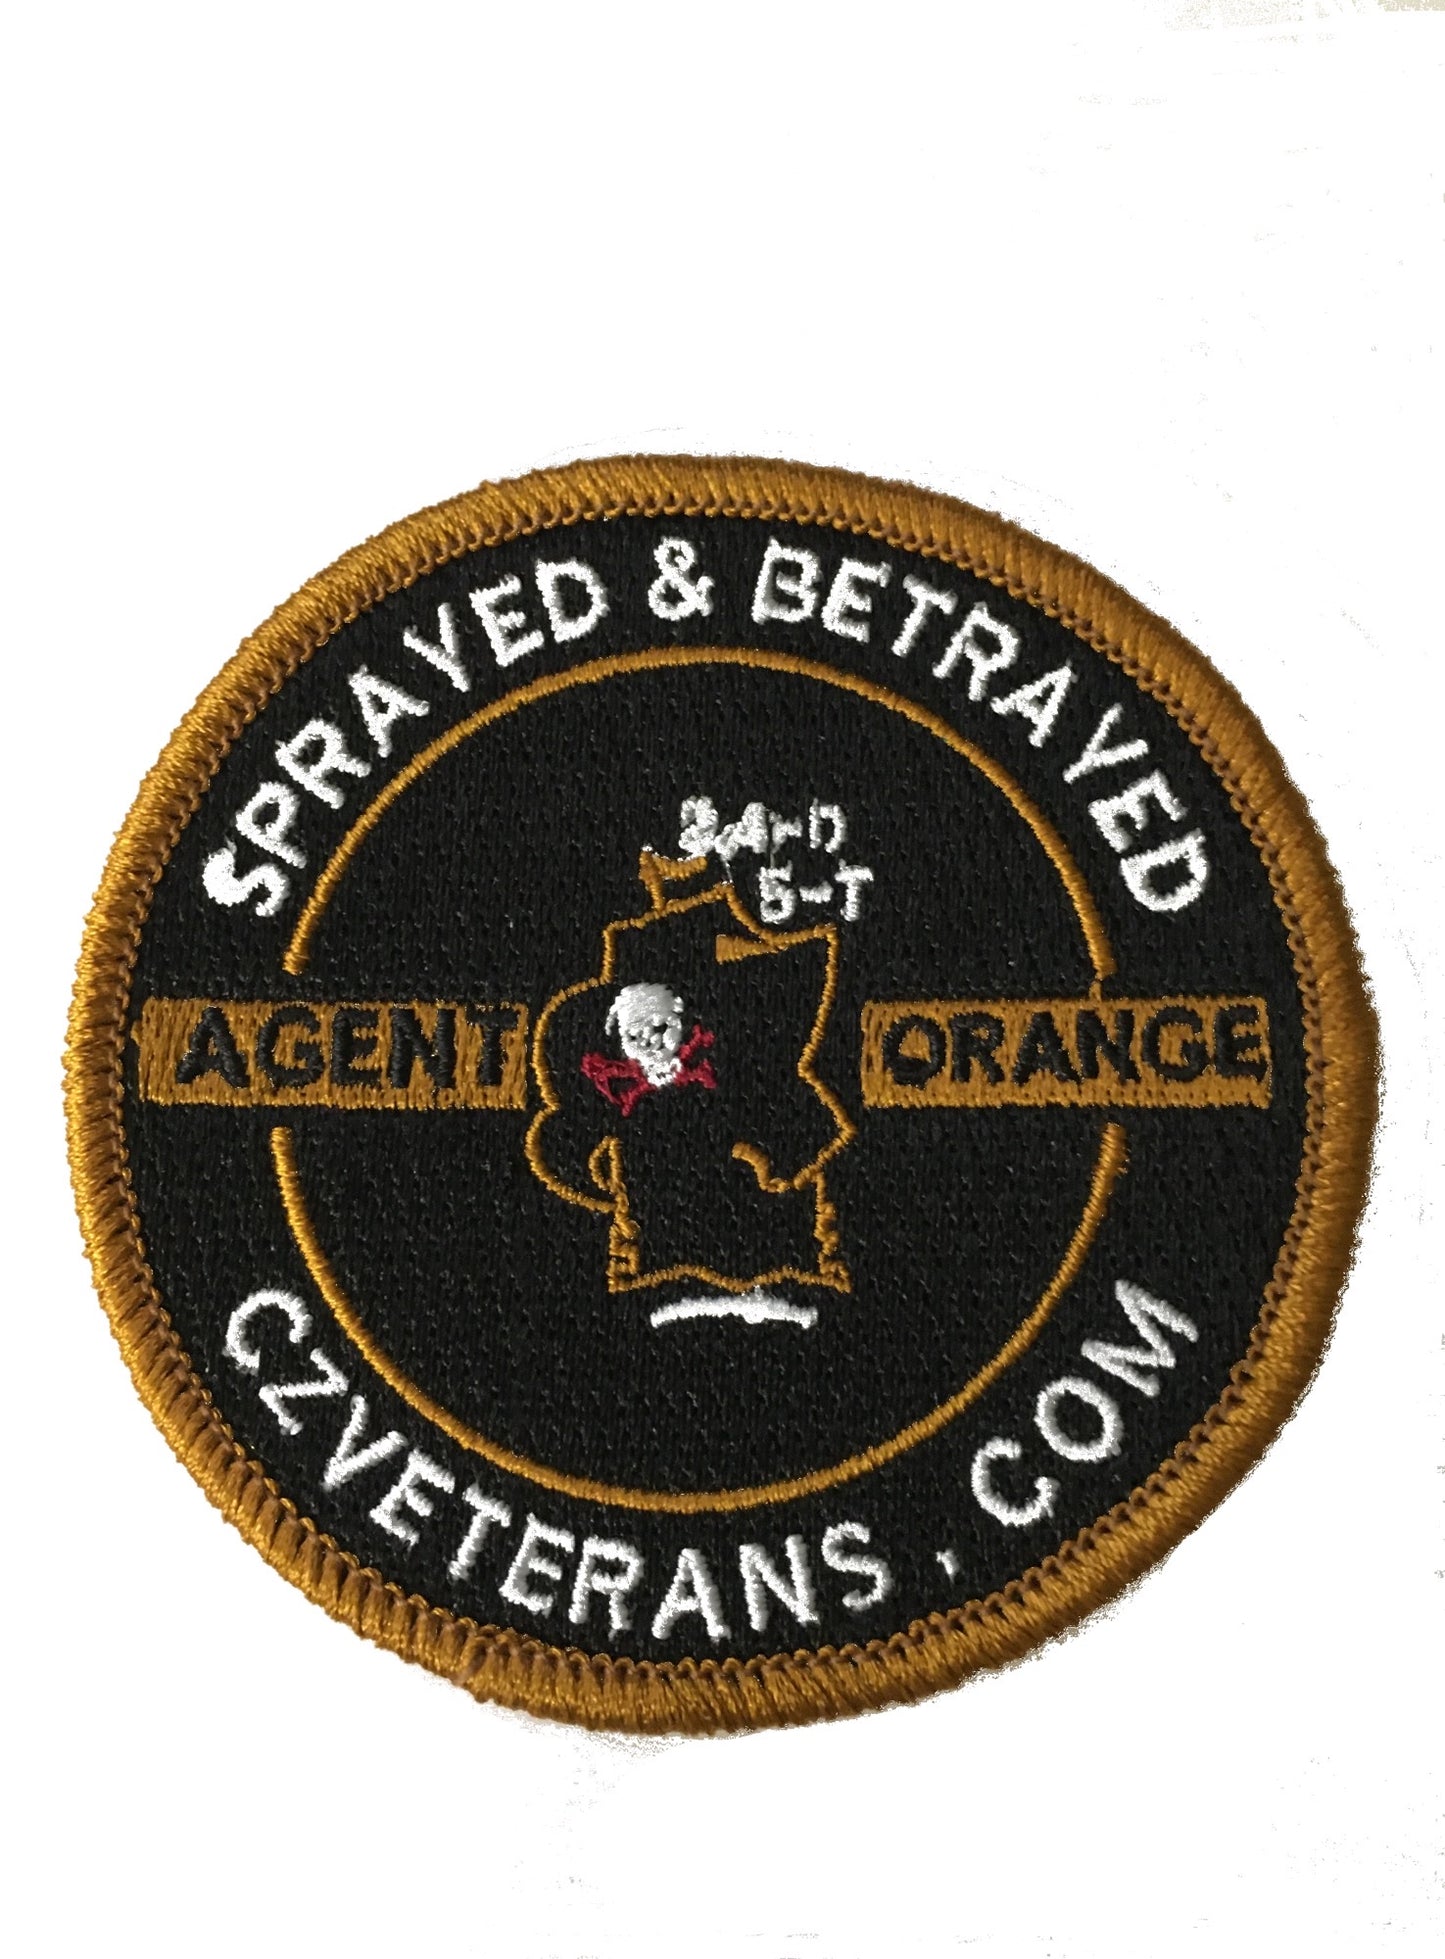 Panama Canal Zone Veterans - Sprayed & Betrayed CZ Veterans patch